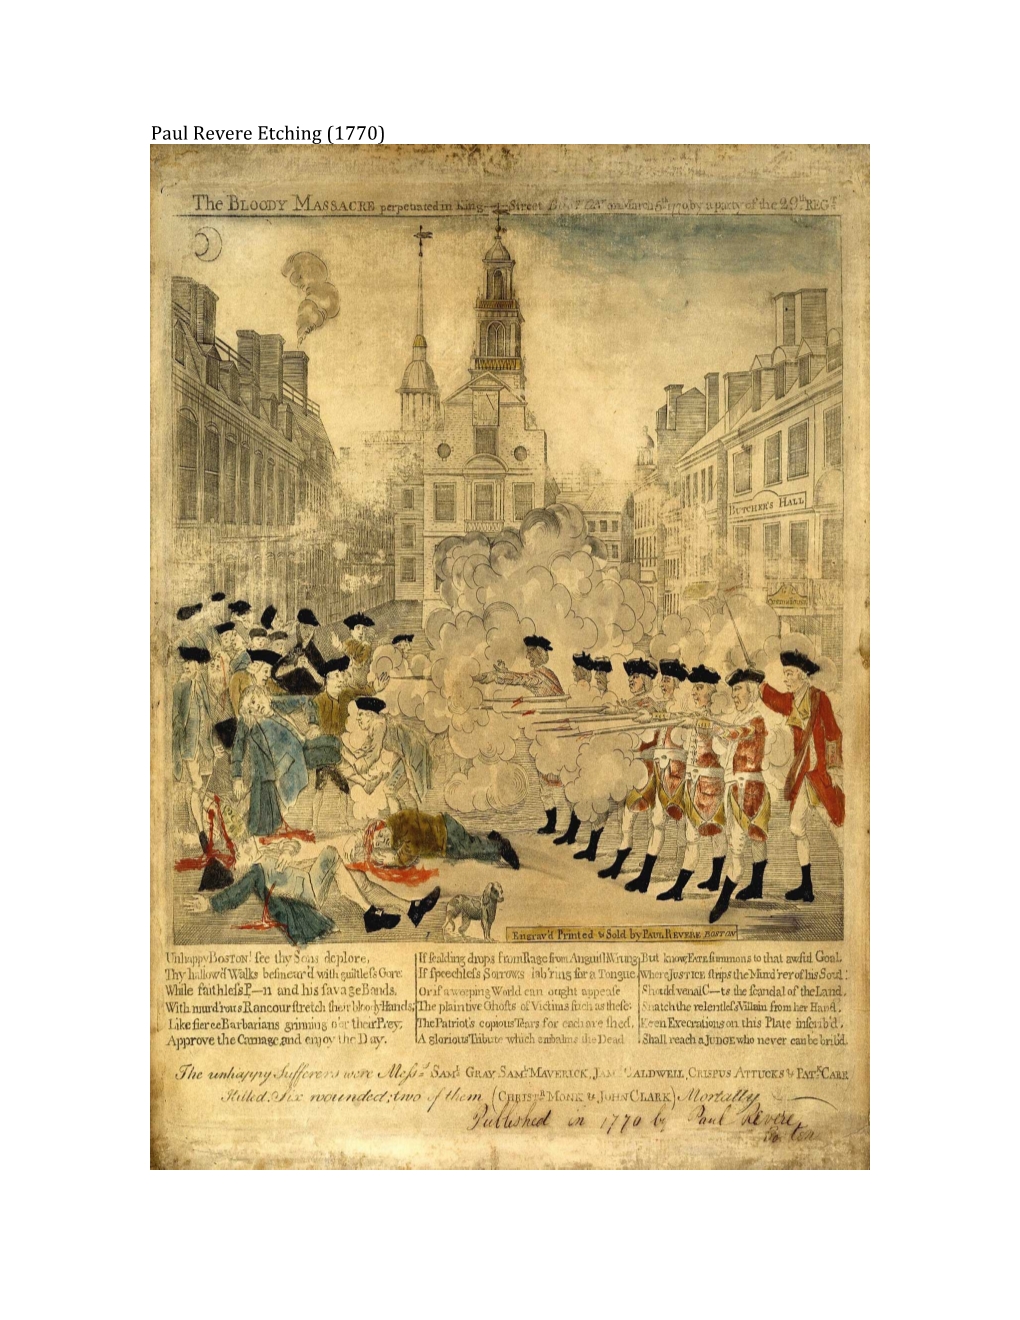 Paul Revere Interpretation of Boston Massacre